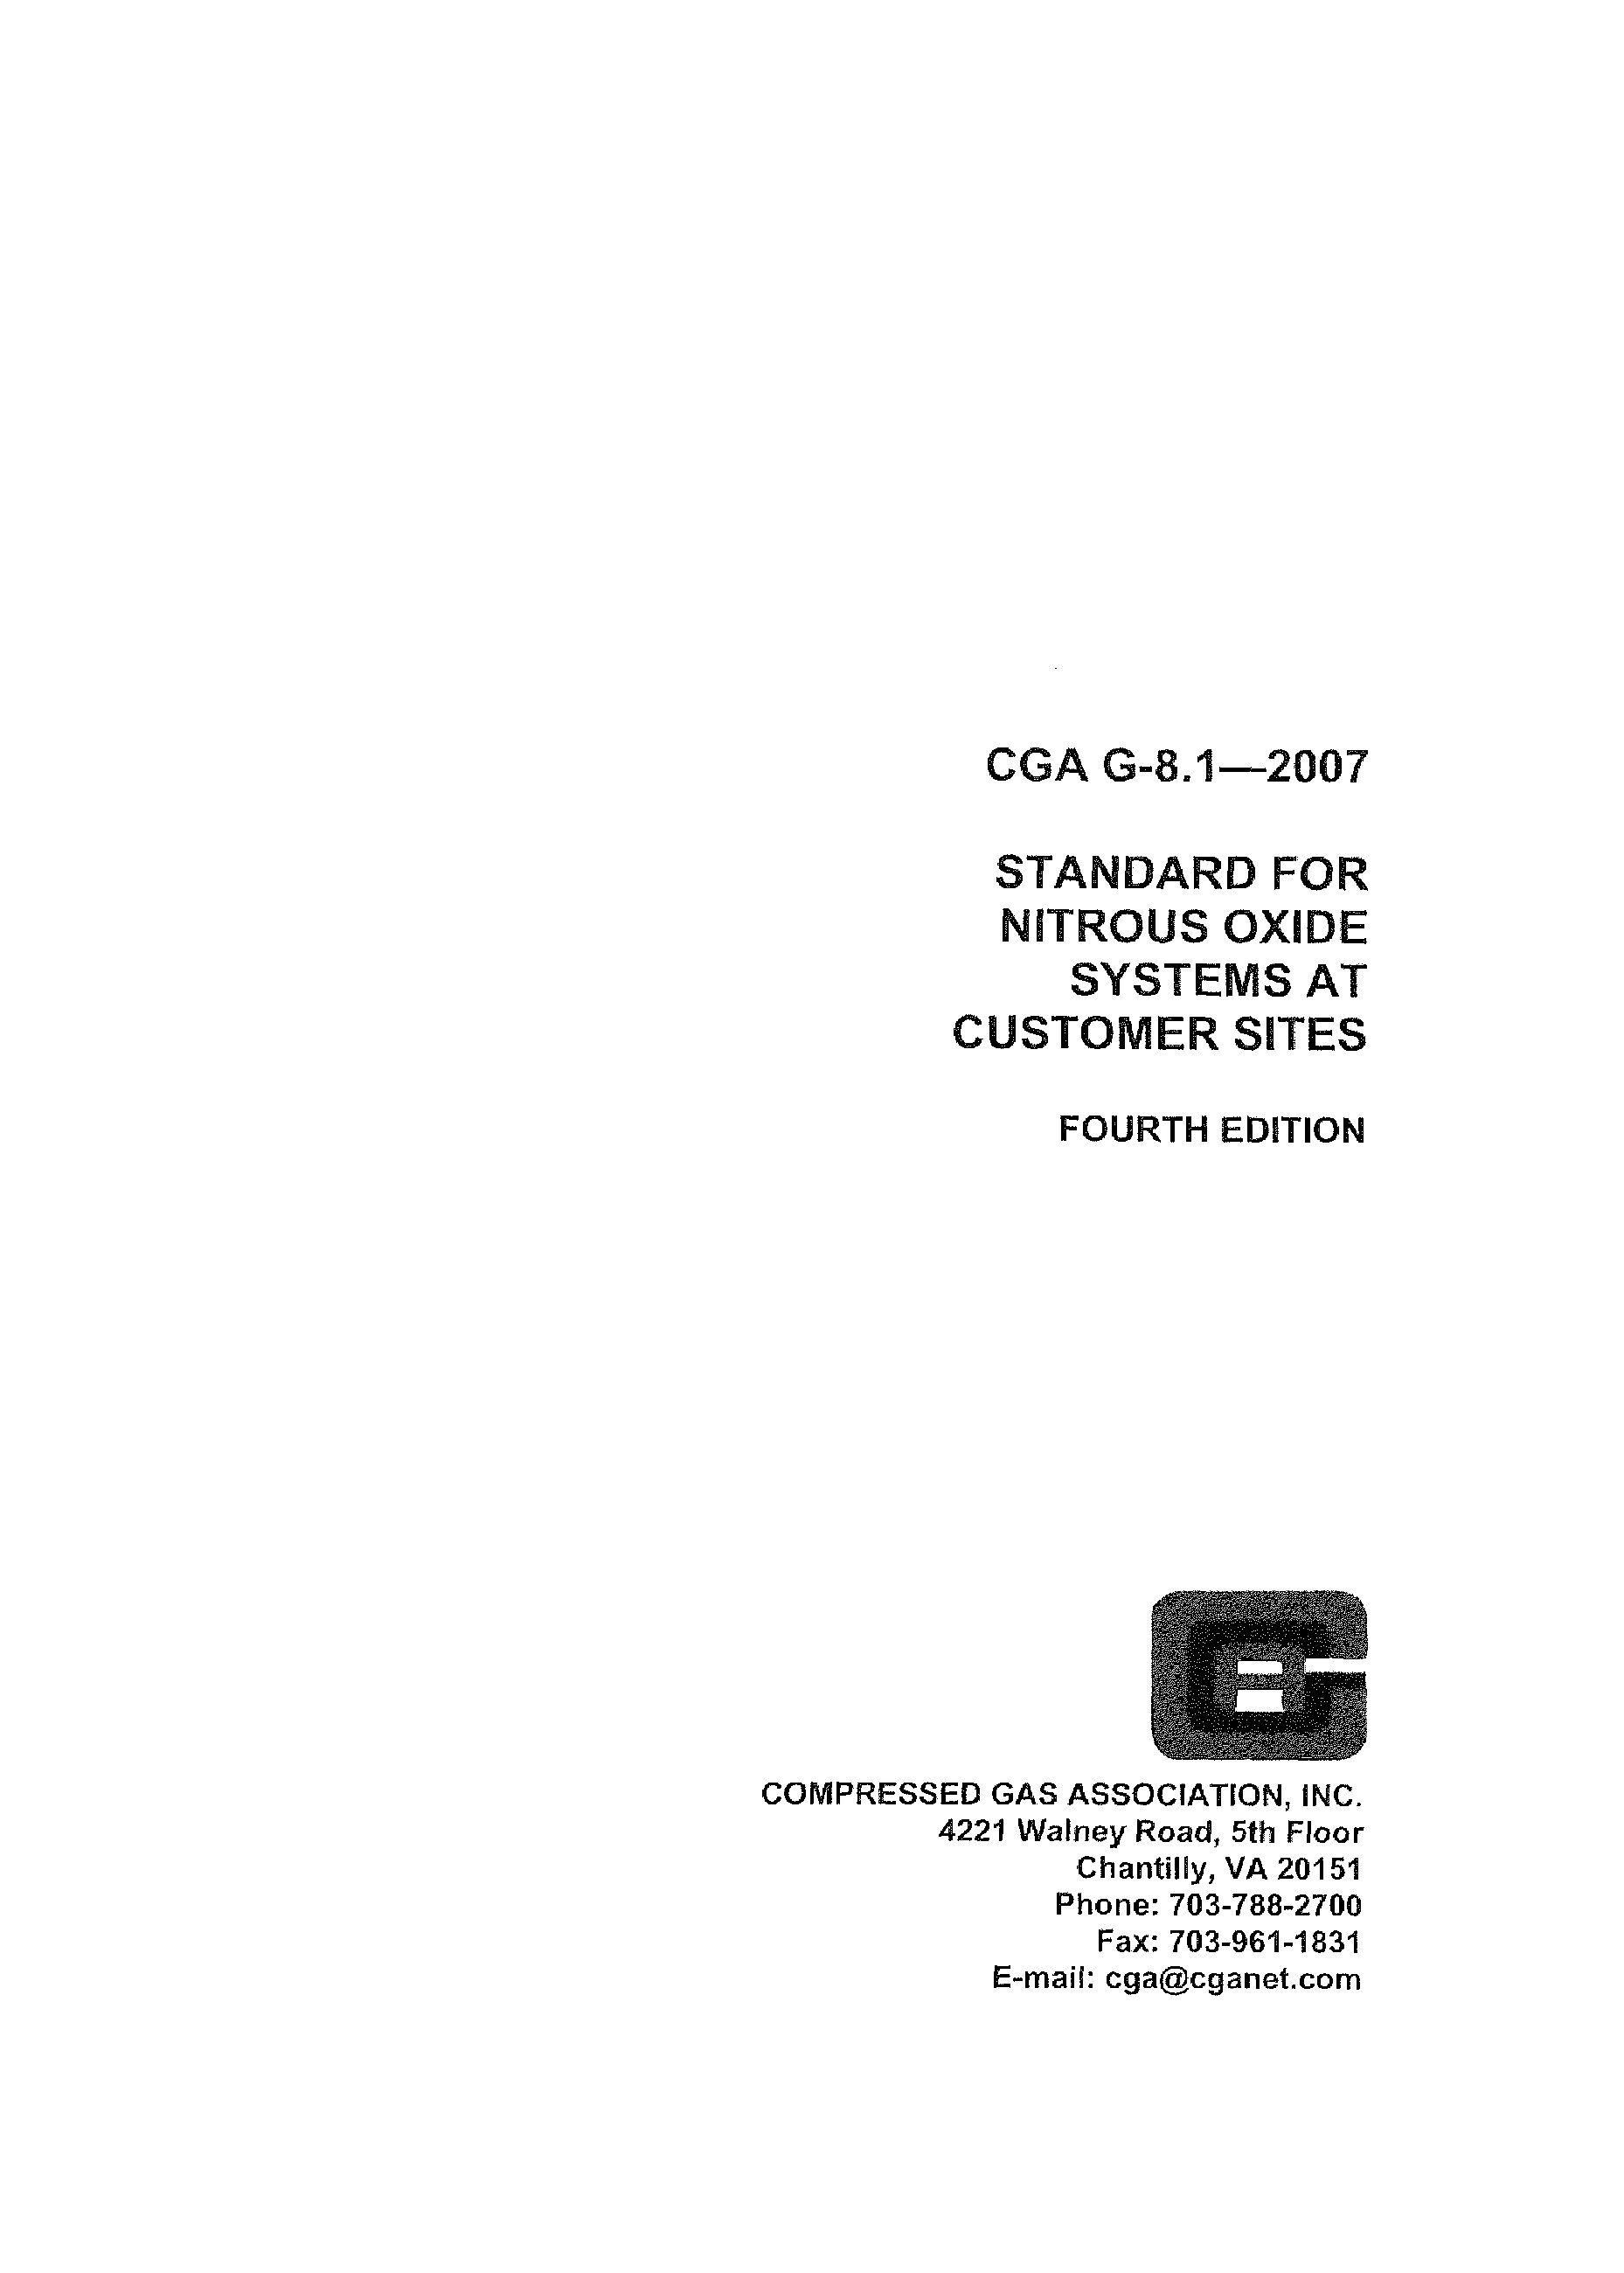 CGA G-8.1-2007